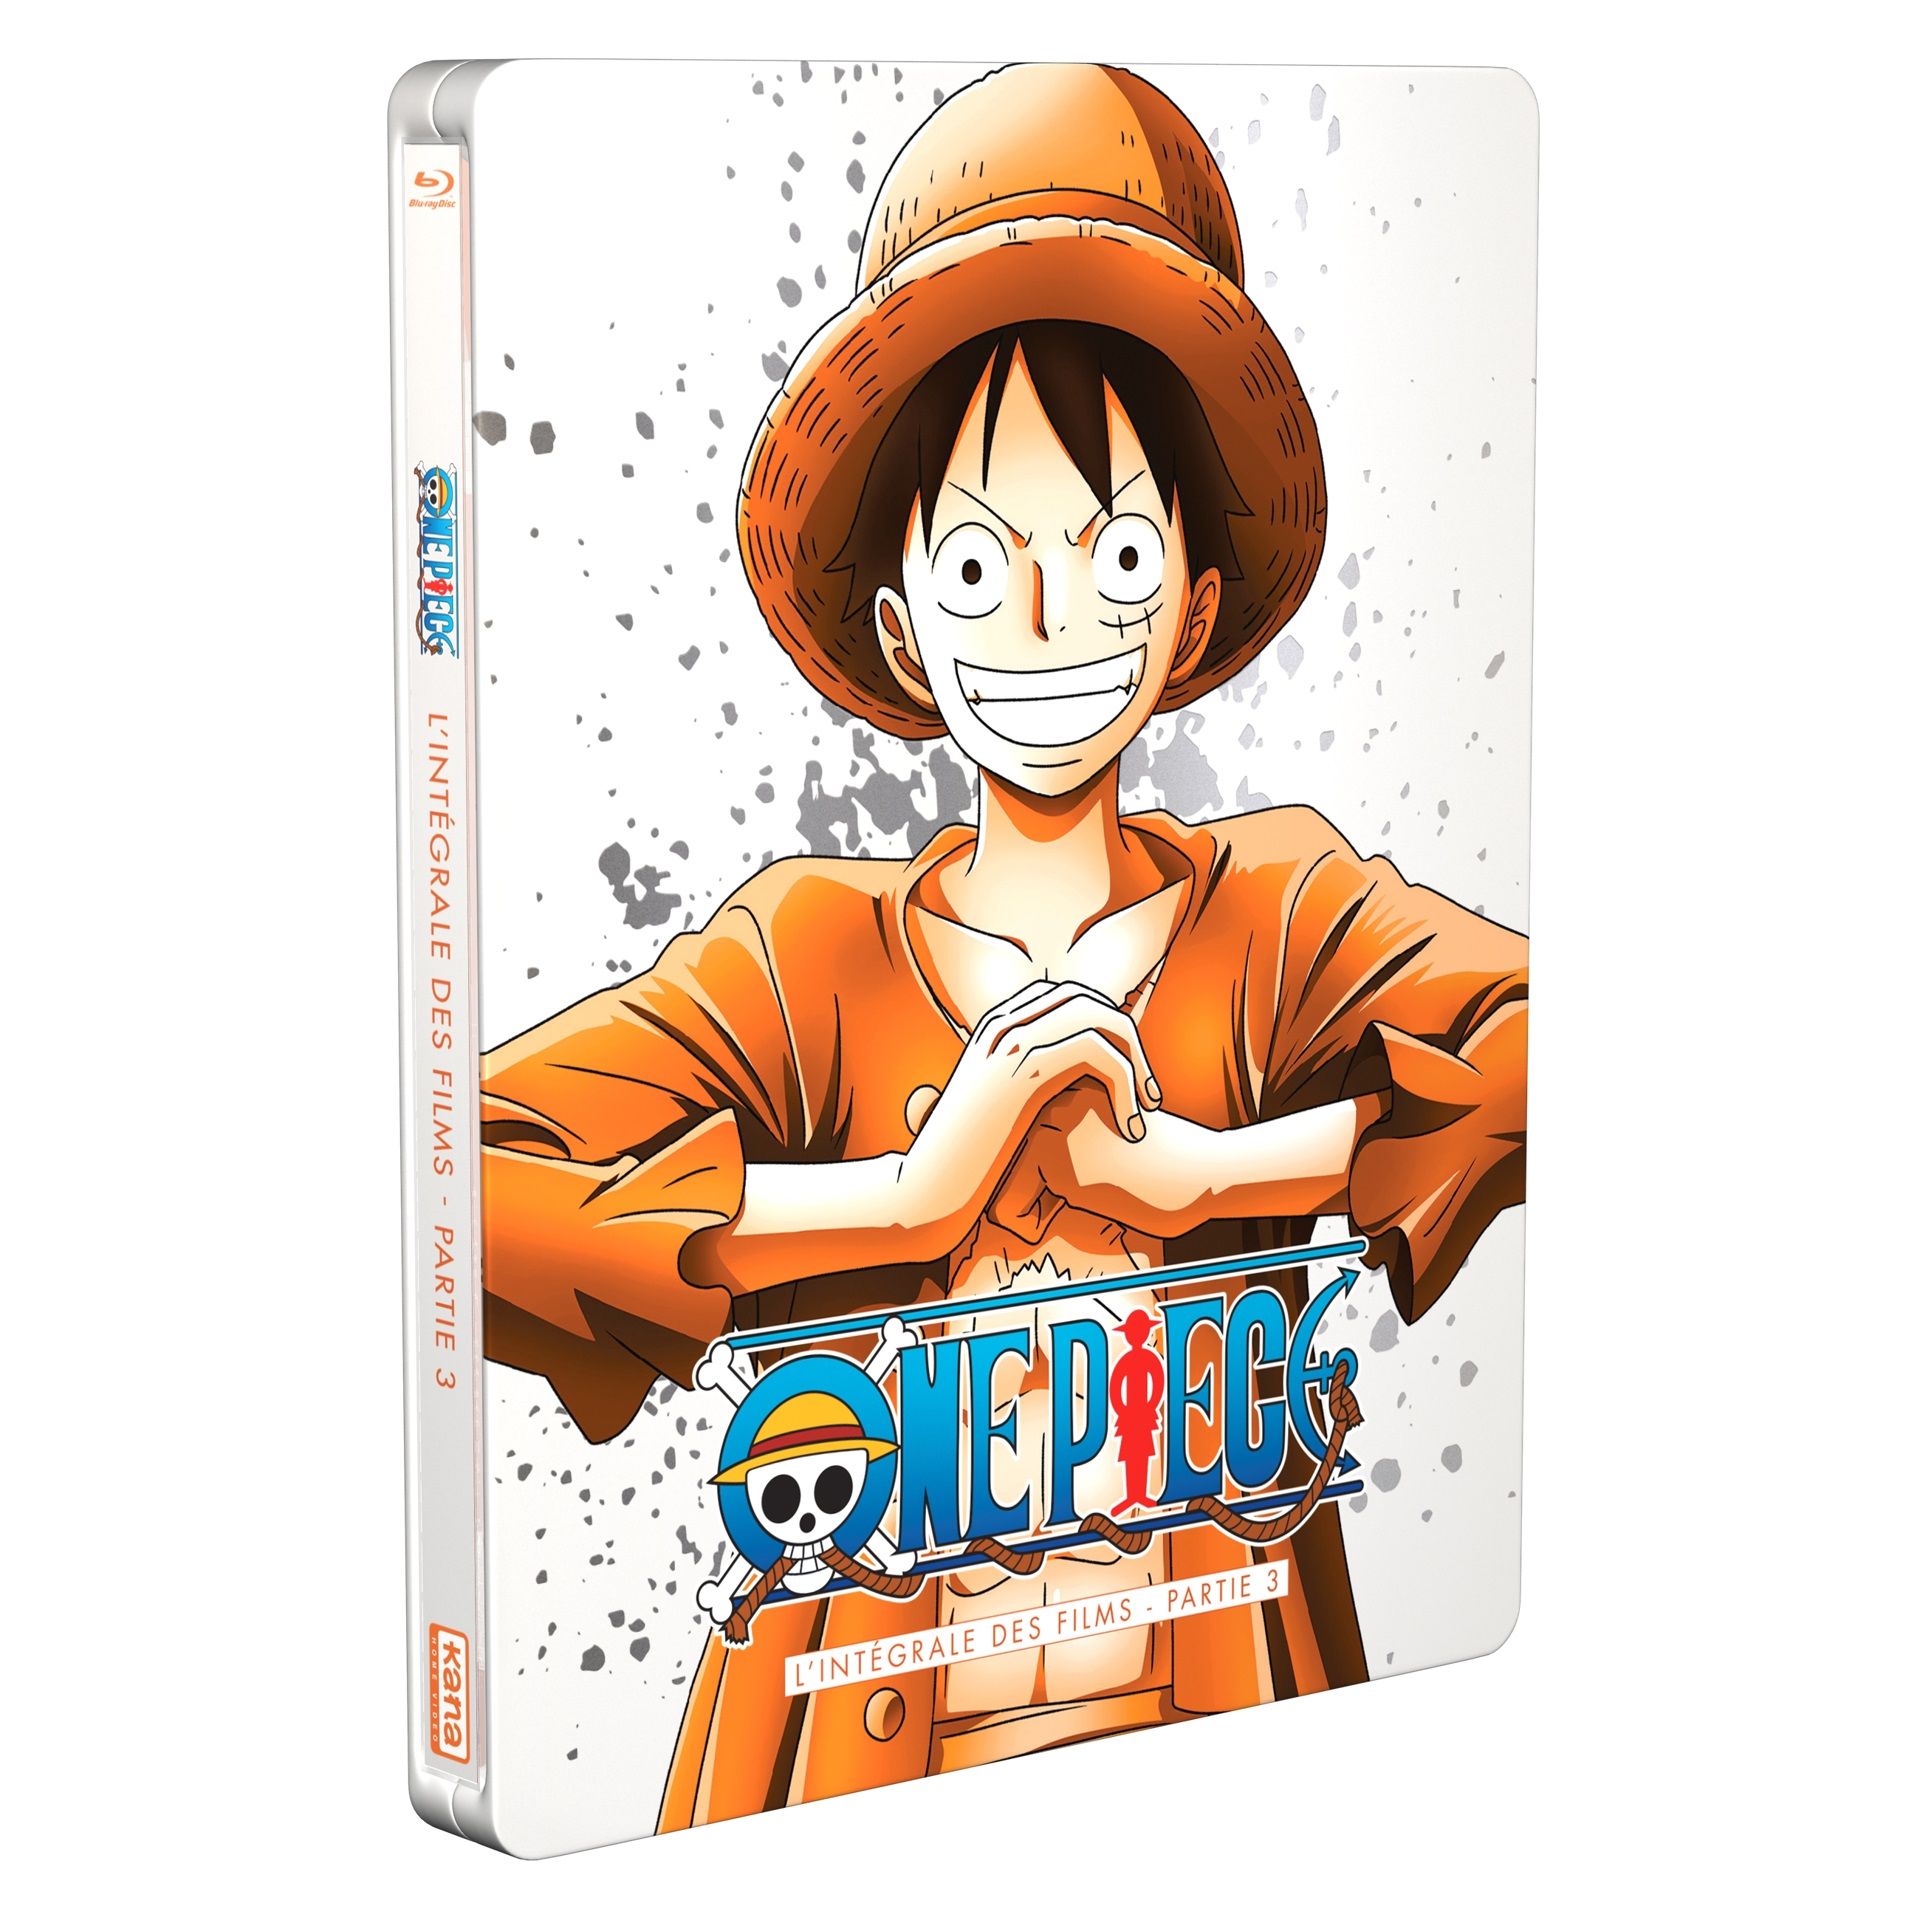 One Piece Films - Coffret 3 - Edition limitée Steelbook